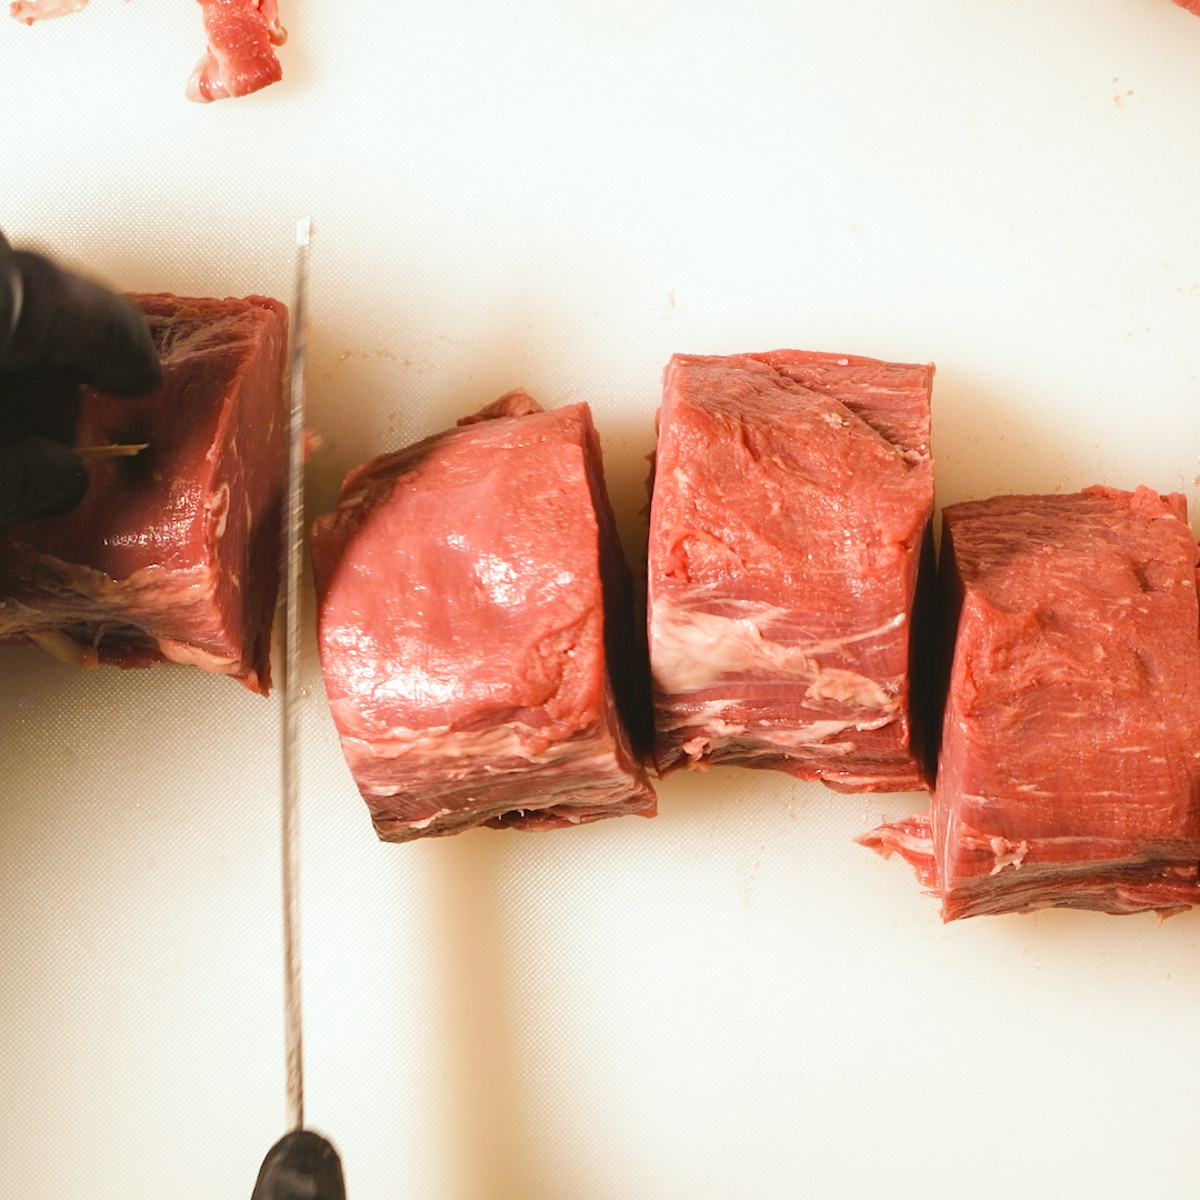 Cut the tenderloin into thick steaks.